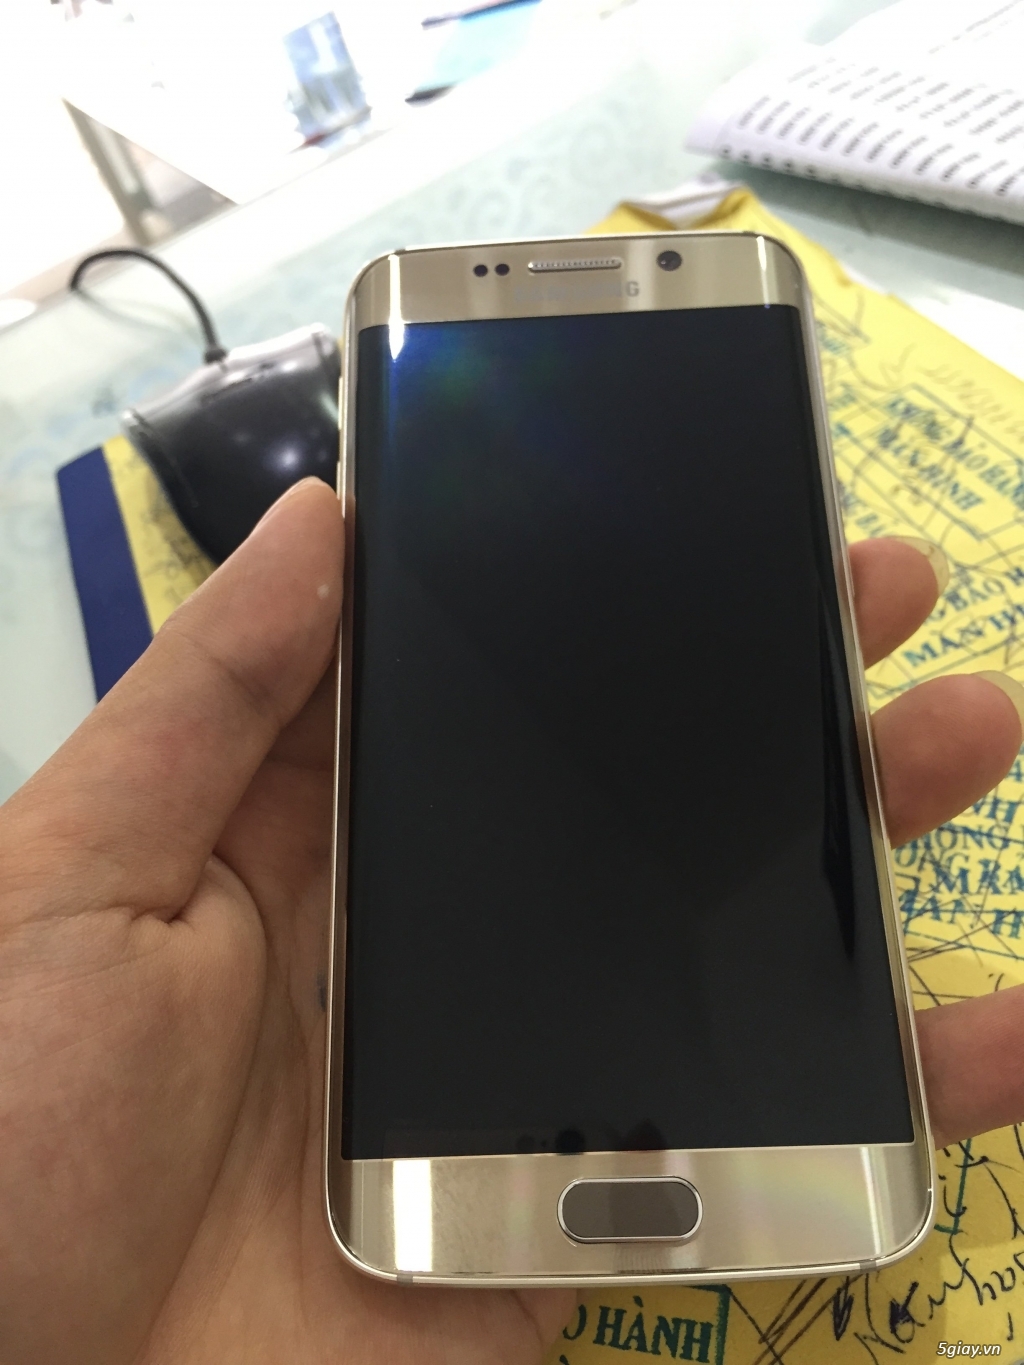 Samsung Galaxy S6 EDGE 32GB Gold - Iphone 6 Plus 16GB Gold